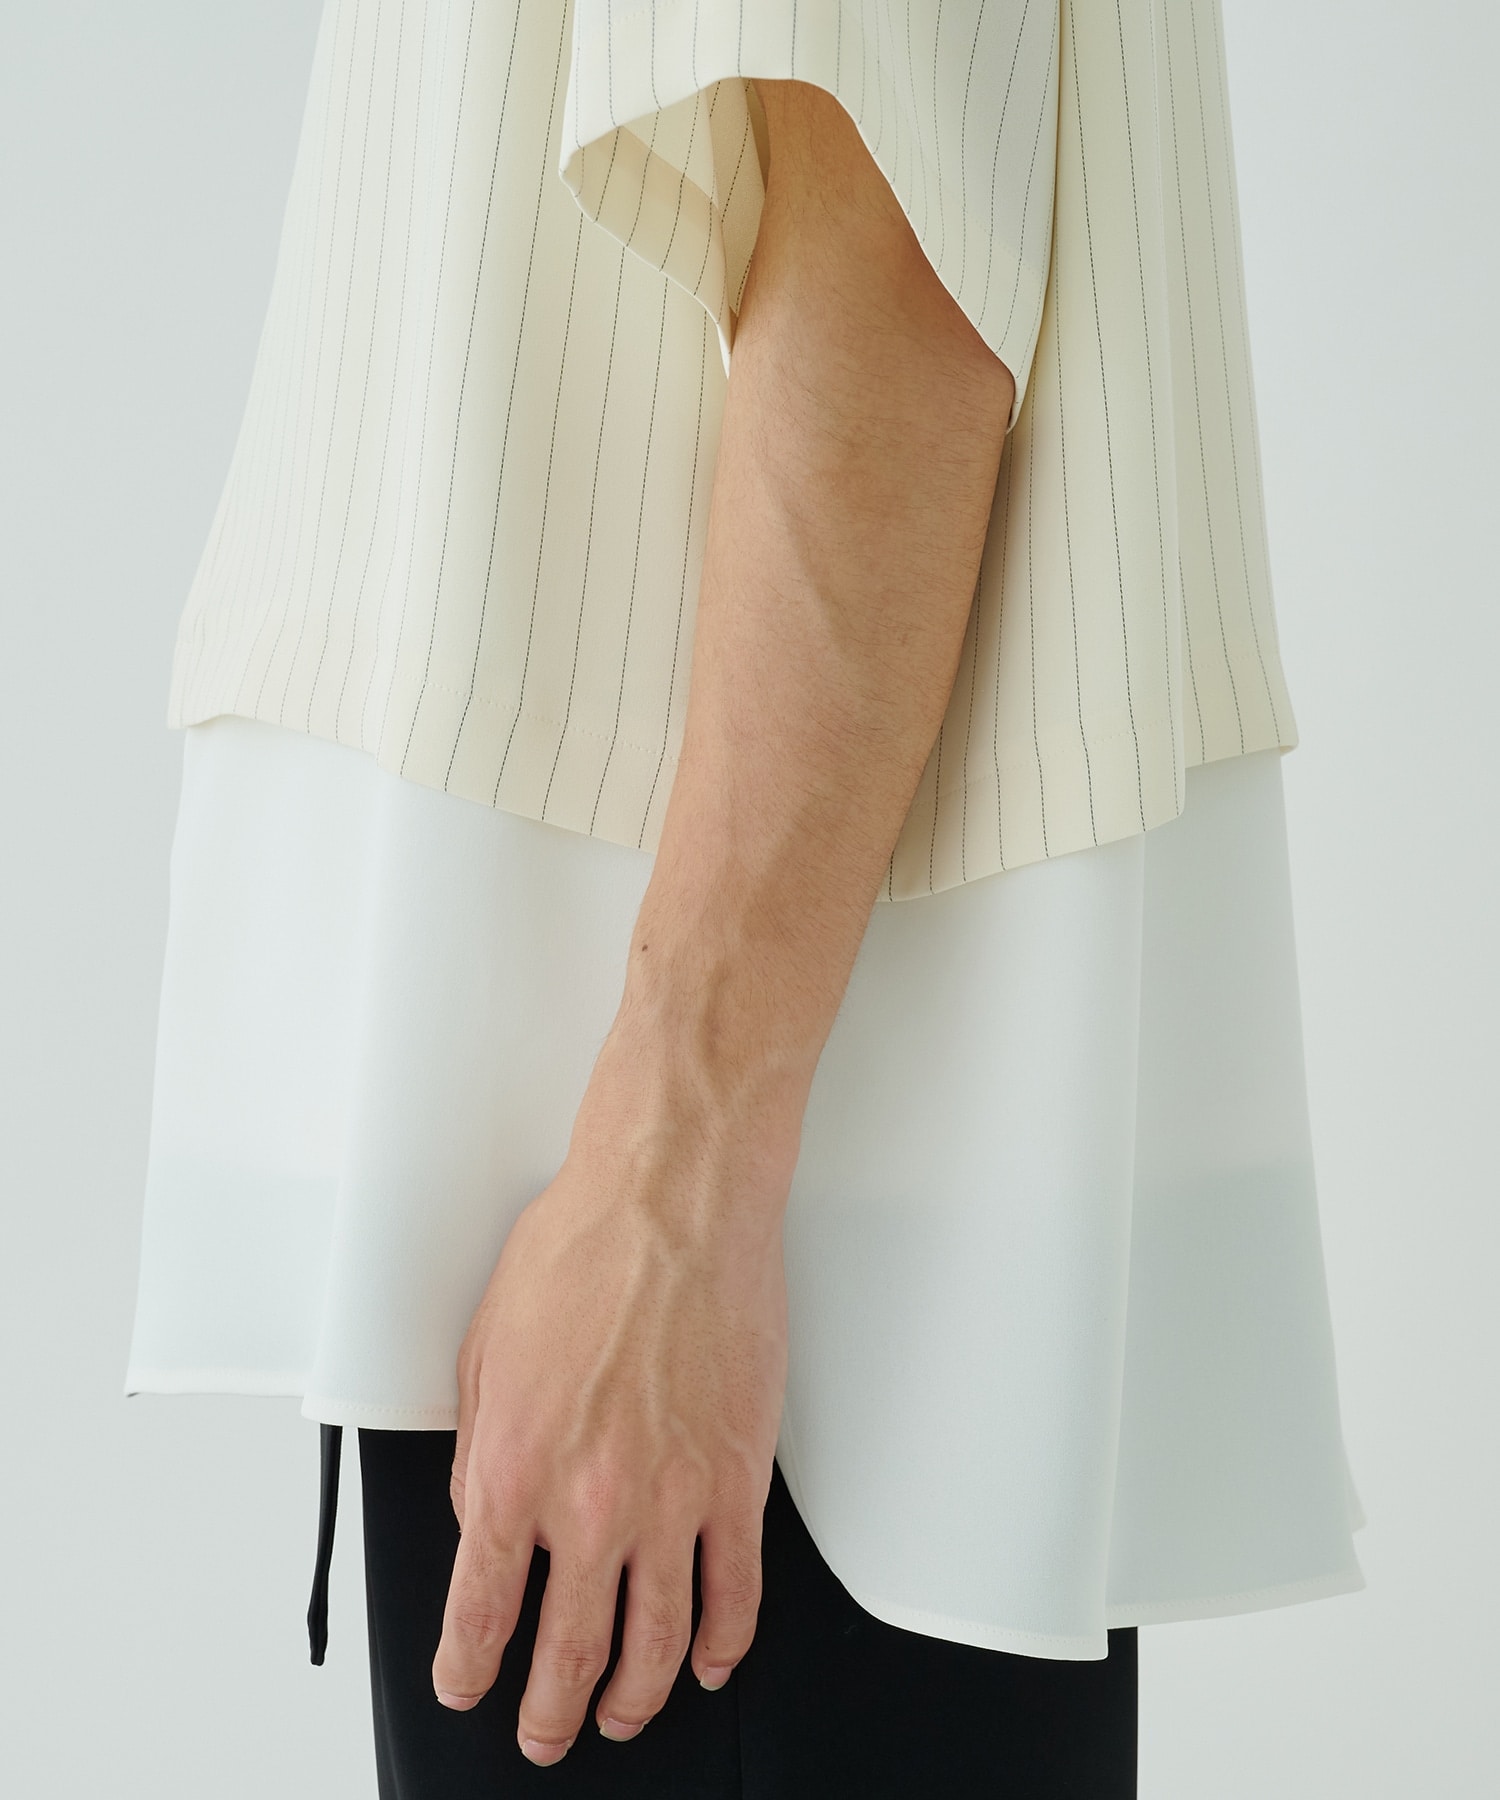 Double Cloth AsymmetricalStripe Short Sleeve Shirt CULLNI